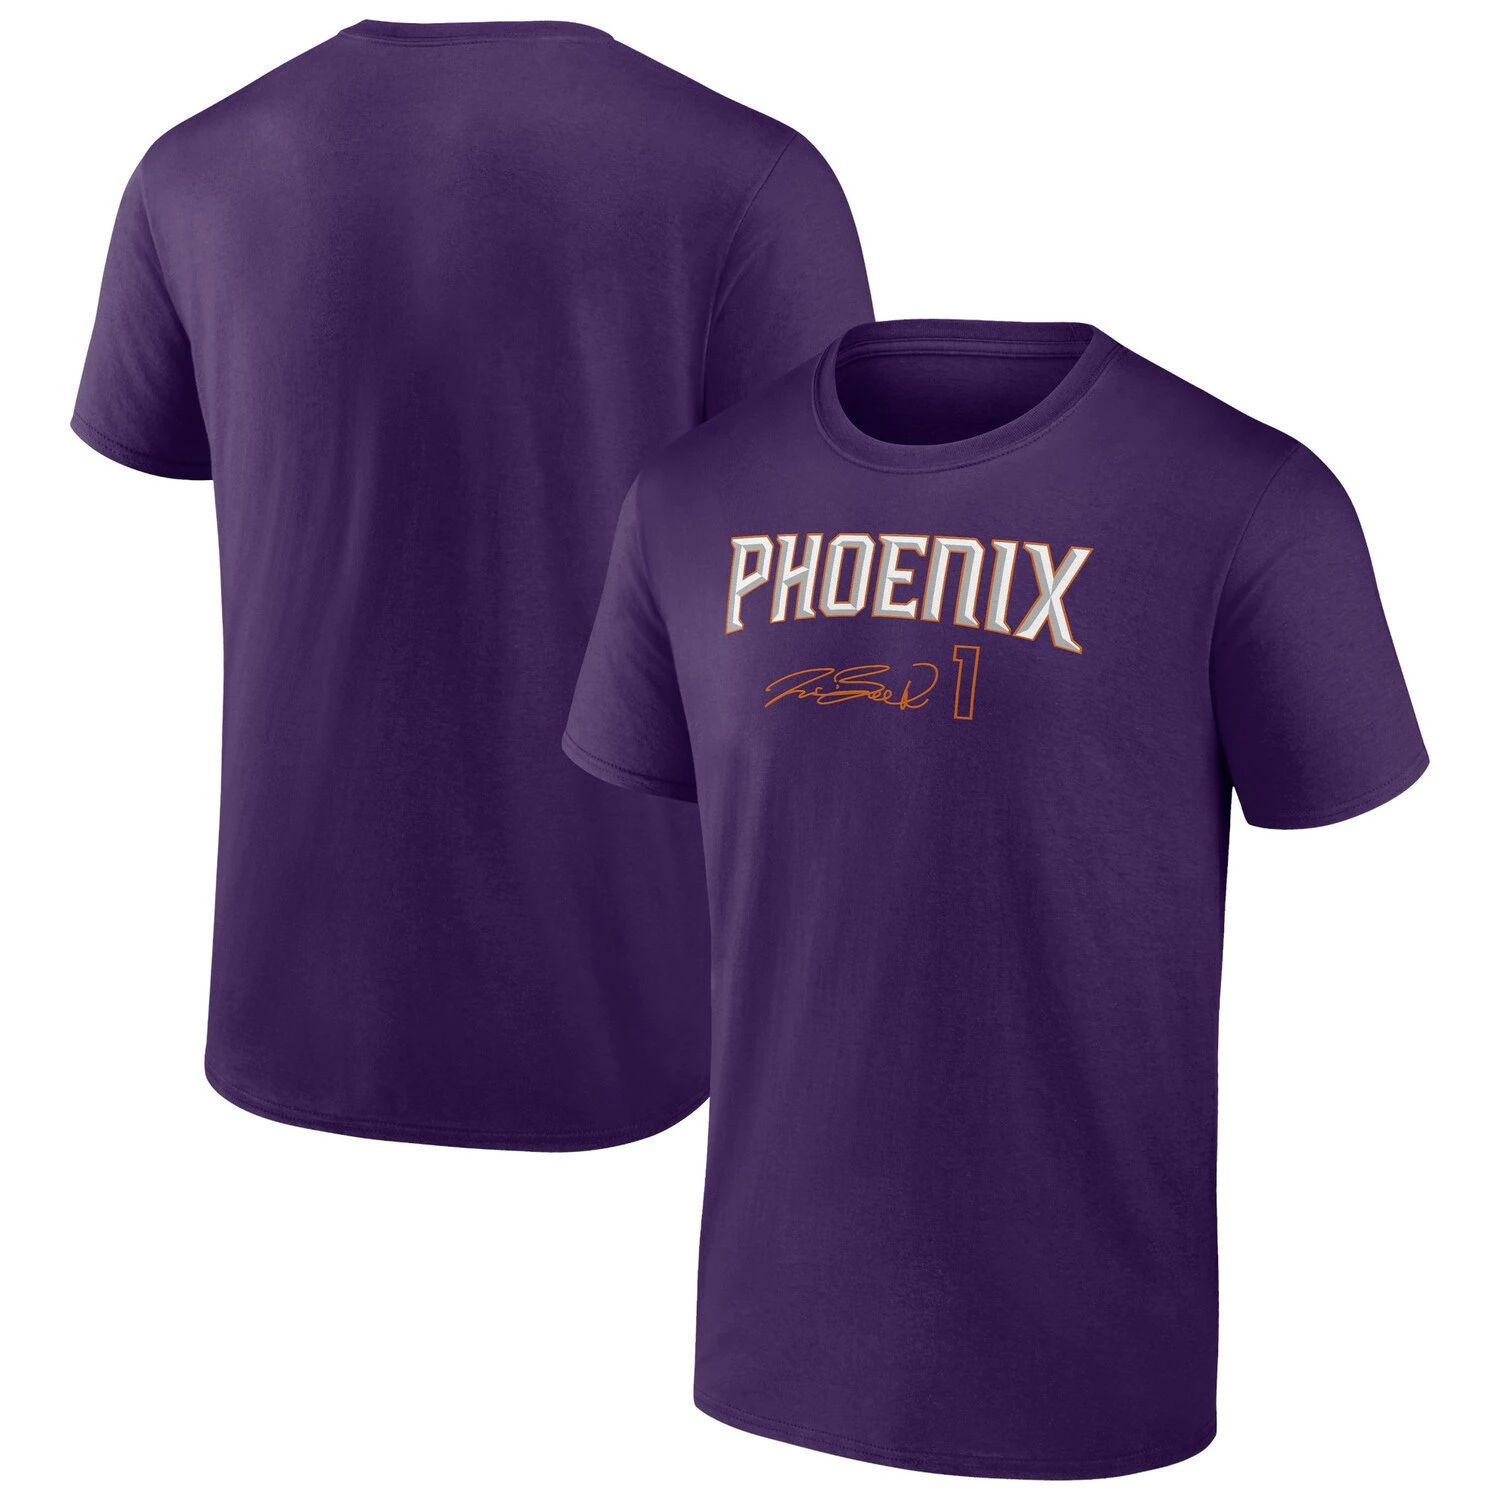 2021 new mens american basketball phoenix devin booker jersey Мужская фиолетовая футболка с именем и номером Devin Booker Phoenix Suns Fanatics